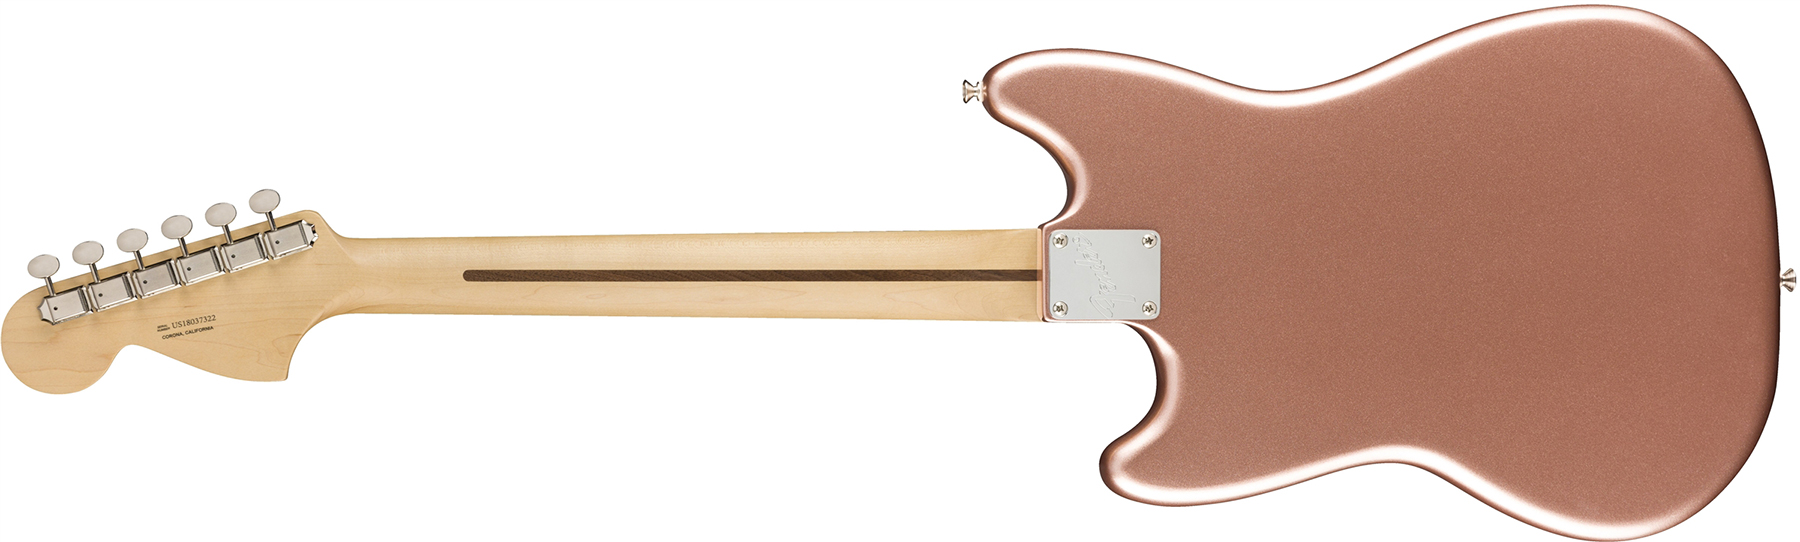 Fender Mustang American Performer Usa Ss Rw - Penny - Guitarra eléctrica de doble corte. - Variation 1